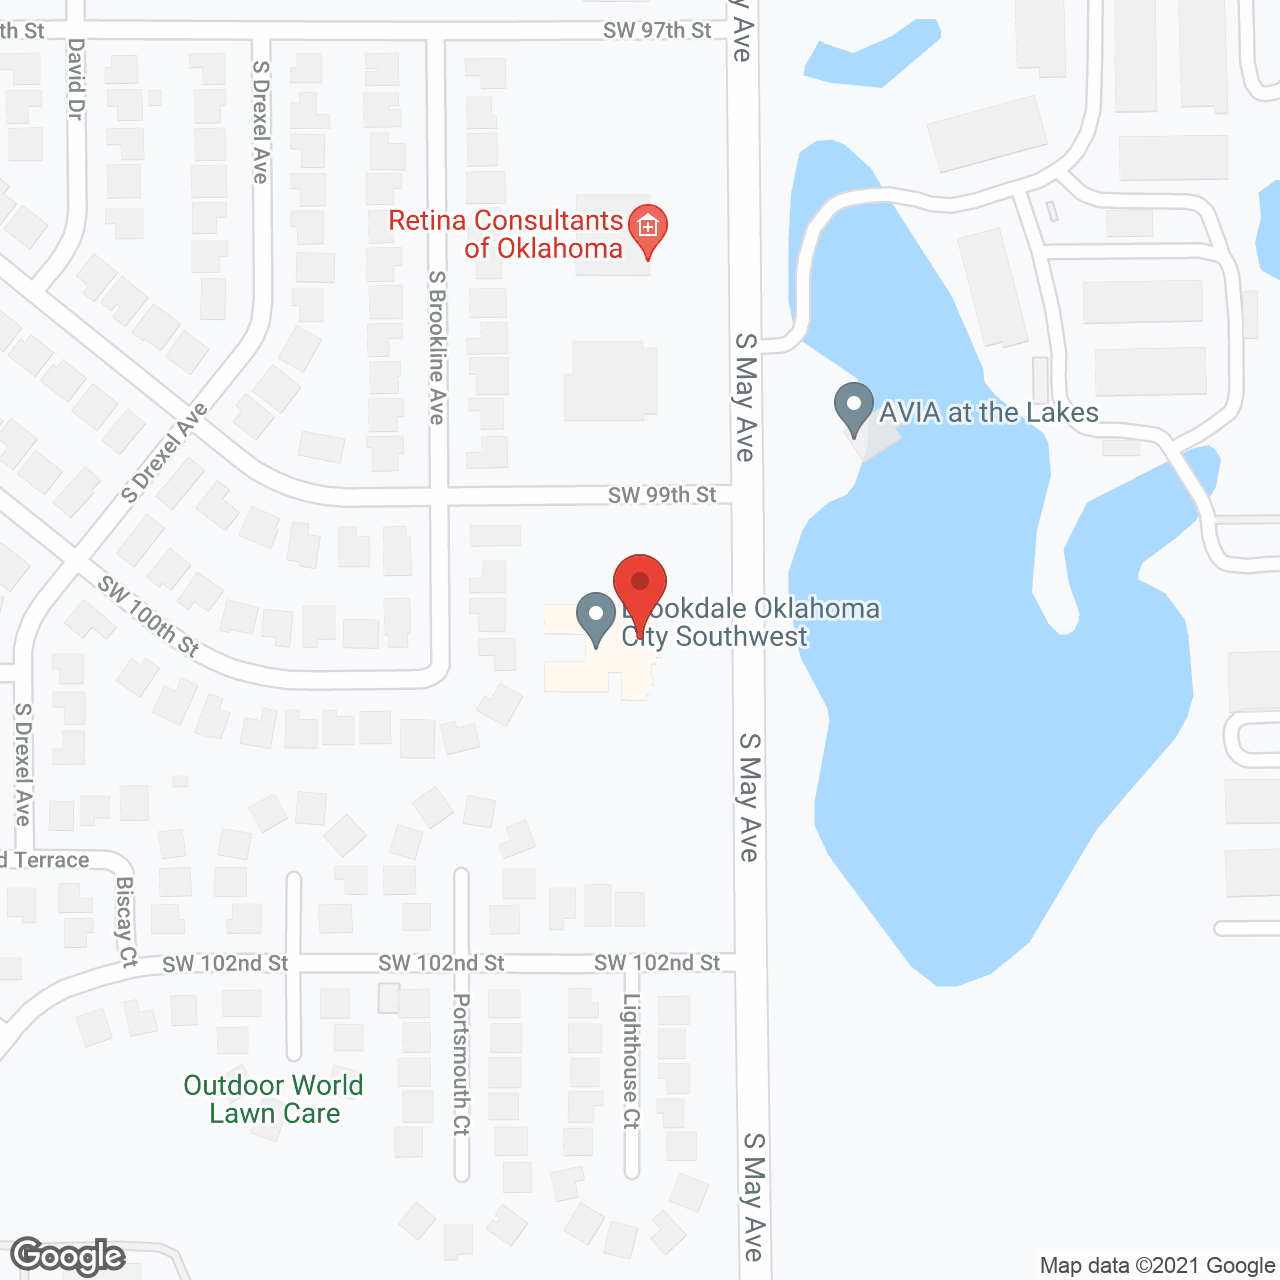 Brookdale Oklahoma City Southwest in google map